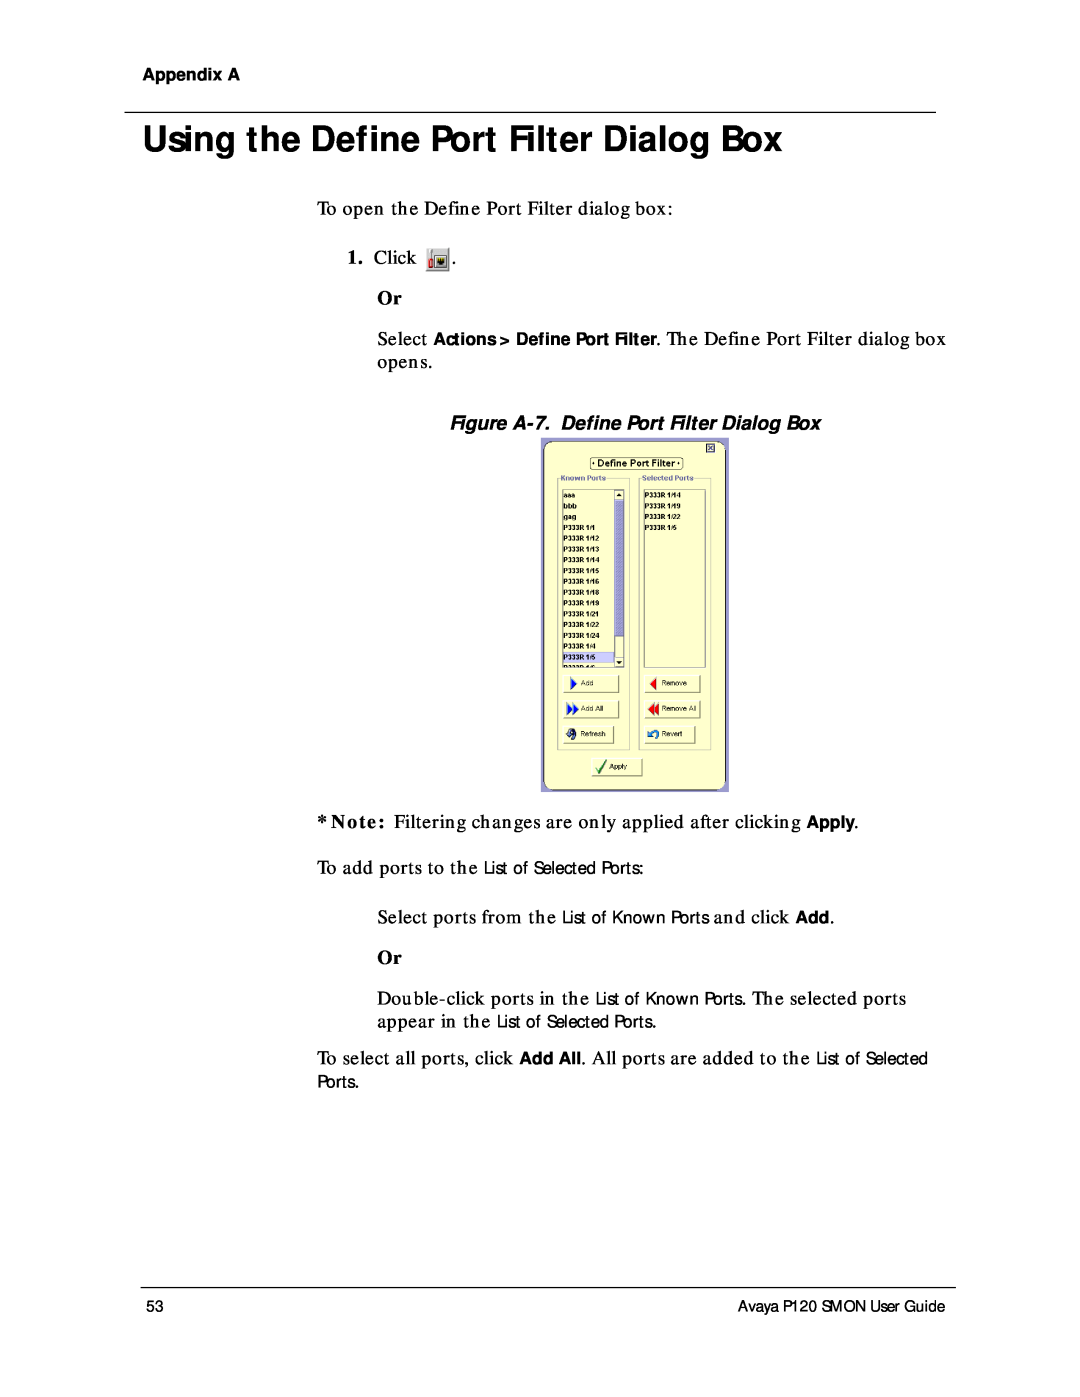 Avaya P120 SMON manual Using the Define Port Filter Dialog Box, Figure A-7. Define Port Filter Dialog Box 